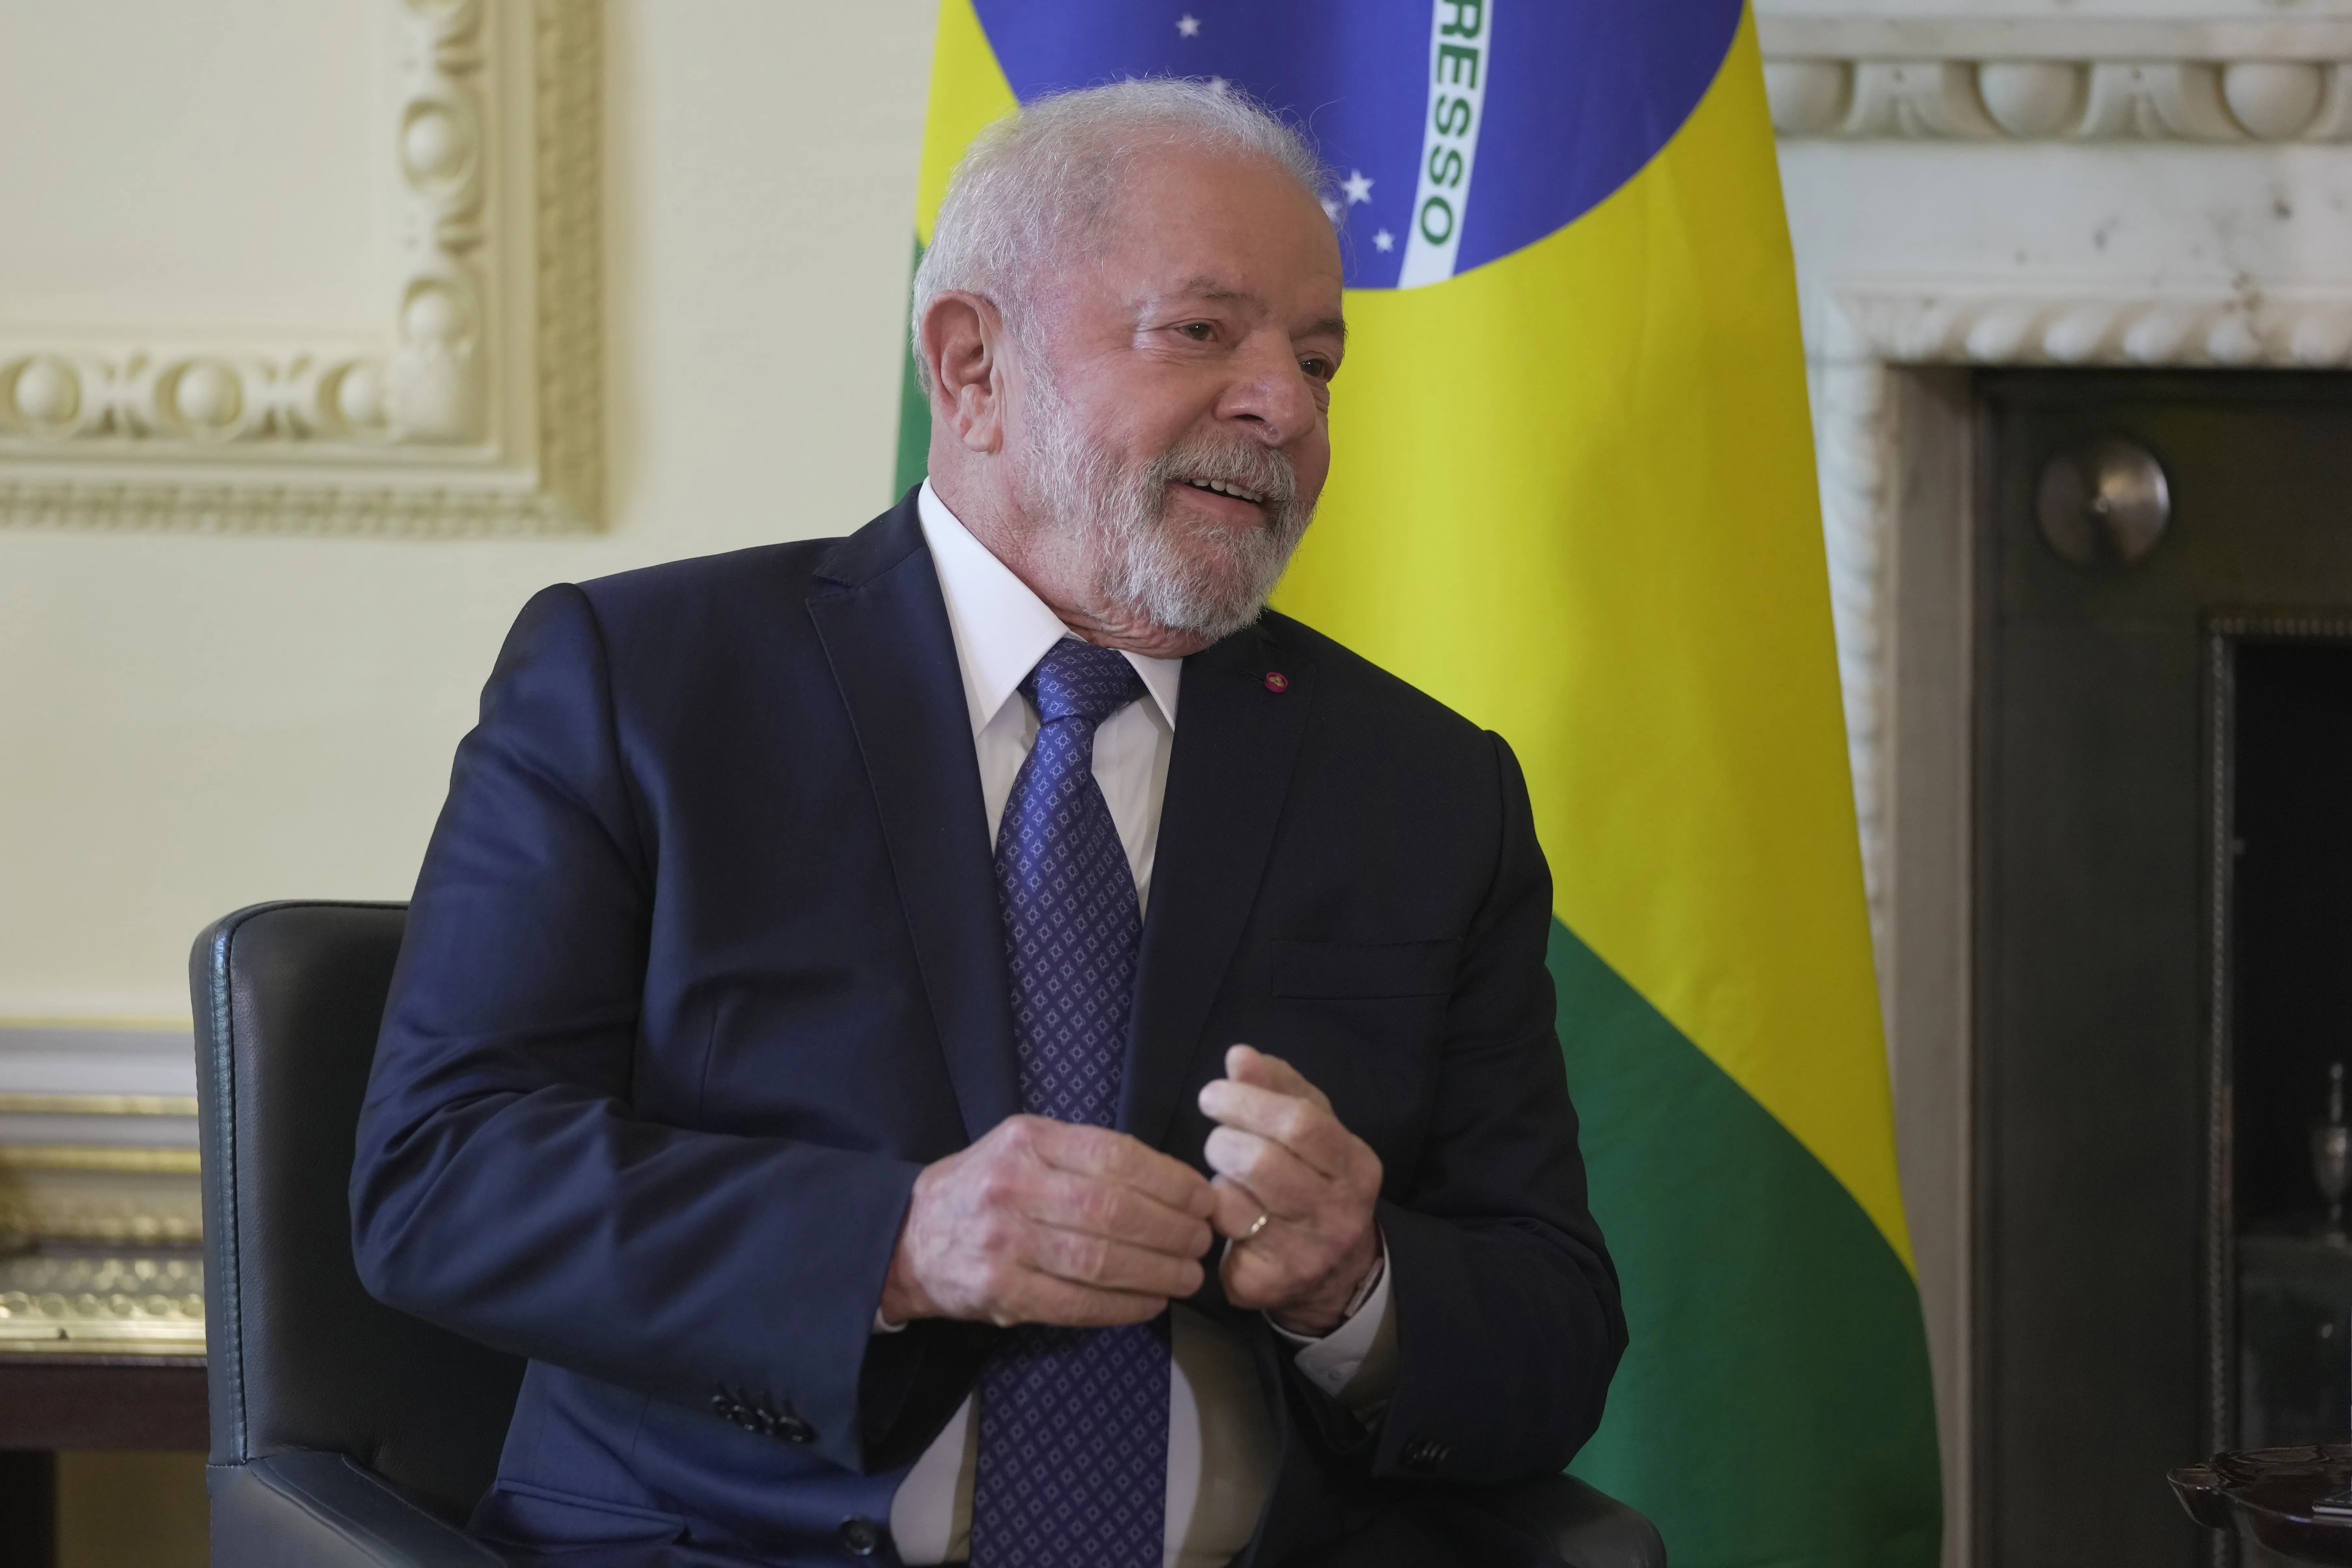 Way more than hedging: Lula's Brazil is gambling high